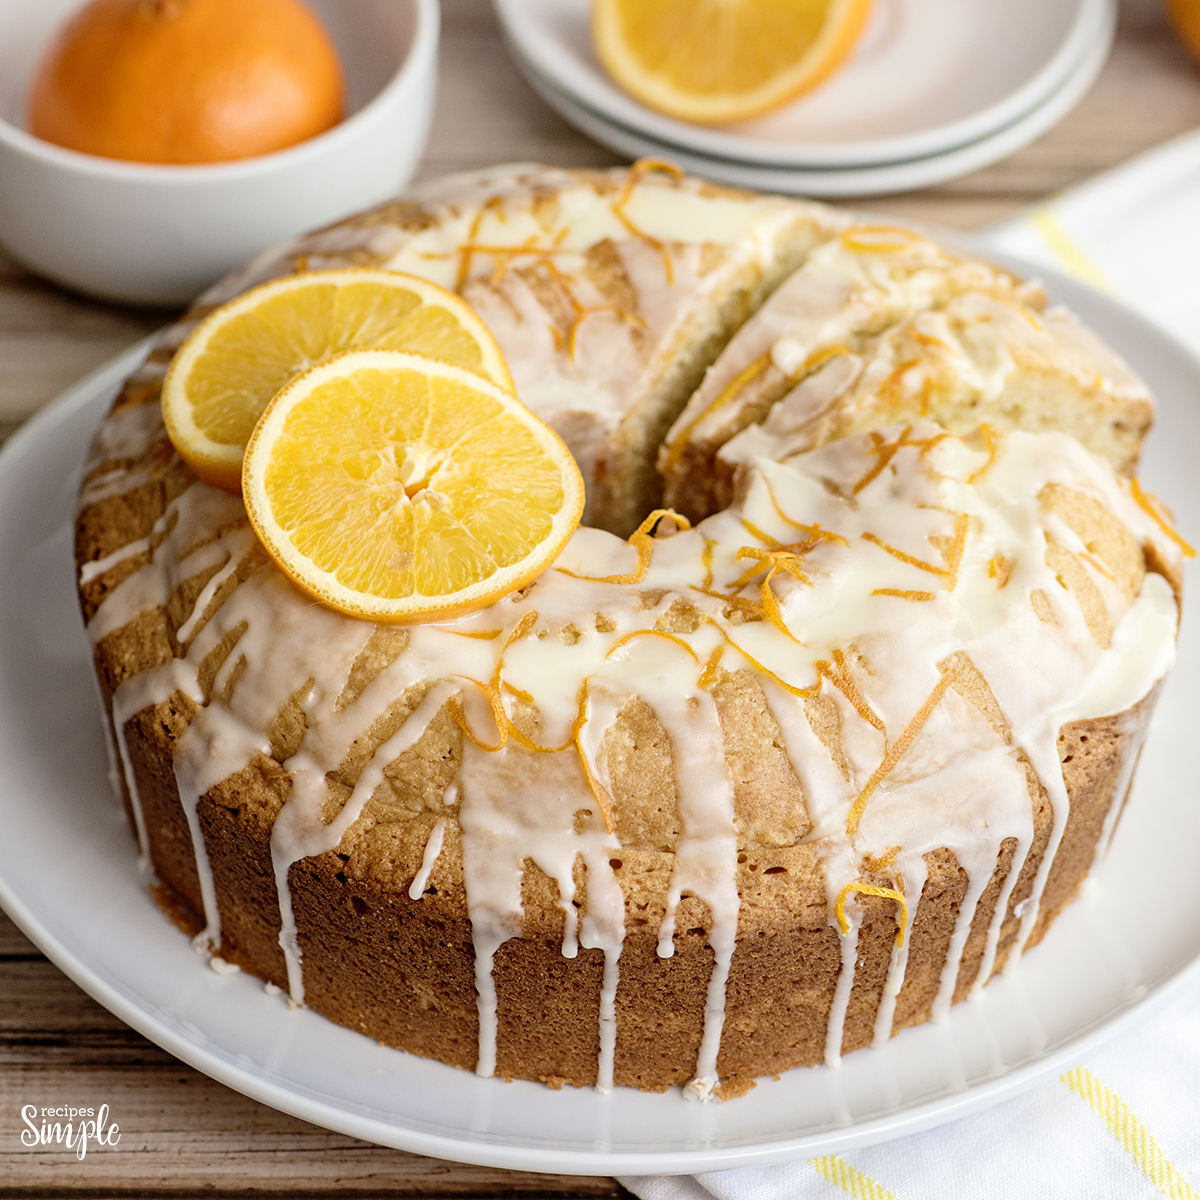 https://www.recipessimple.com/wp-content/uploads/2021/03/Glazed-Orange-Bundt-Cake.jpg